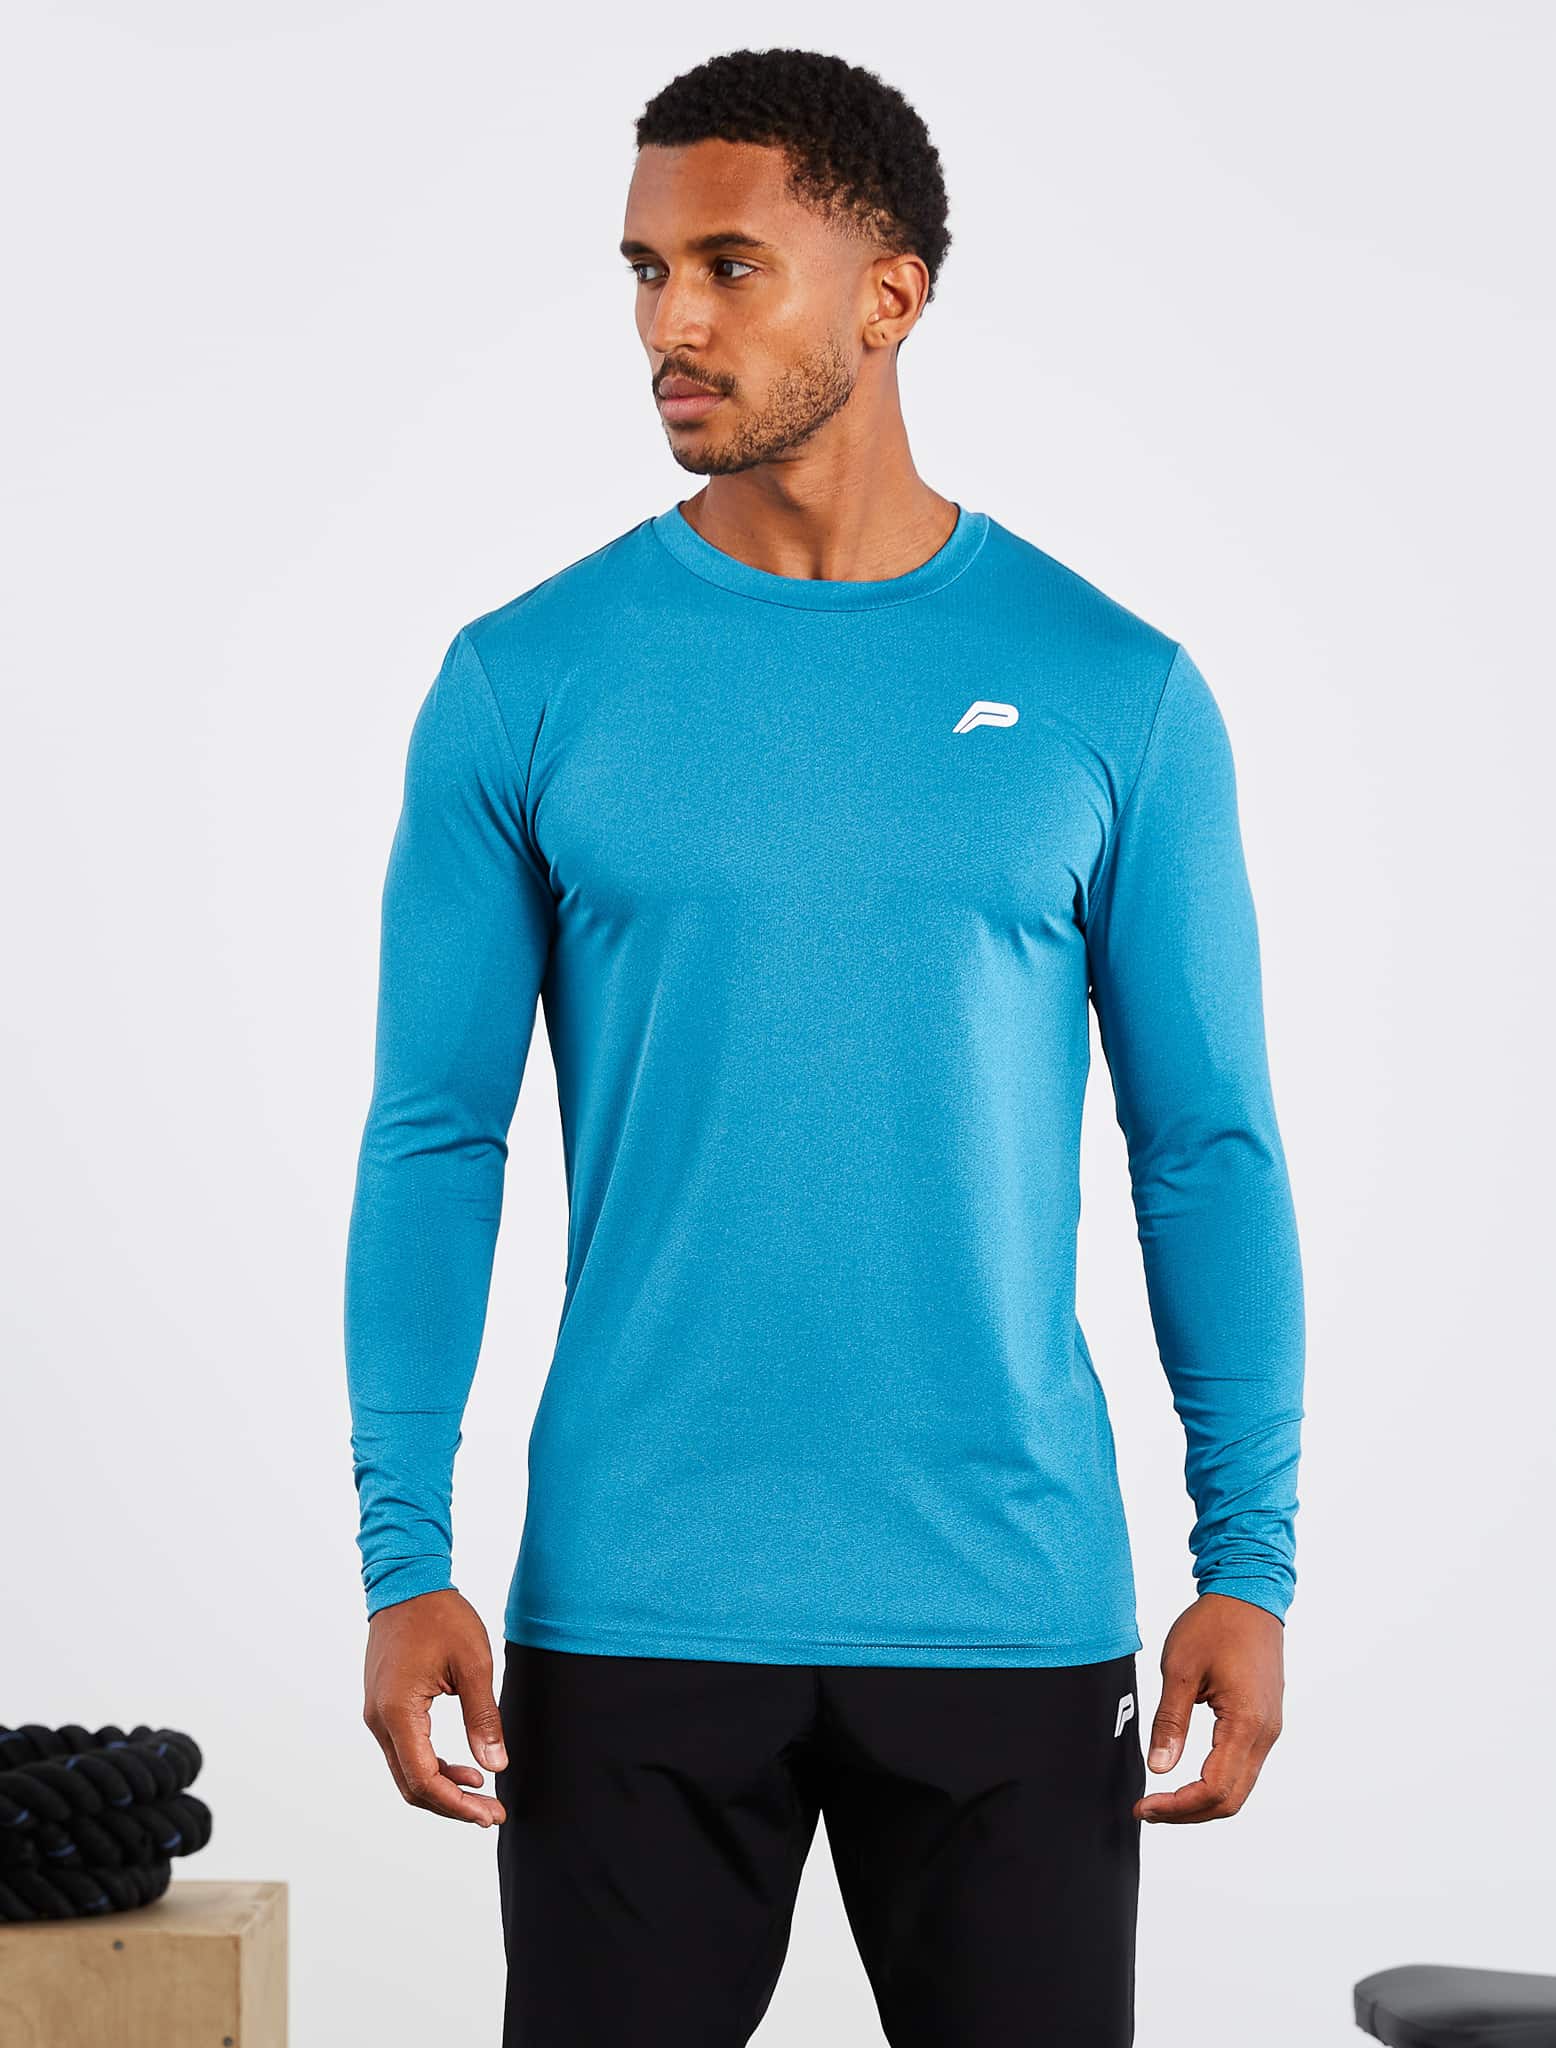 Men's Long Sleeve Shirts, Gym Tops & Training Tops